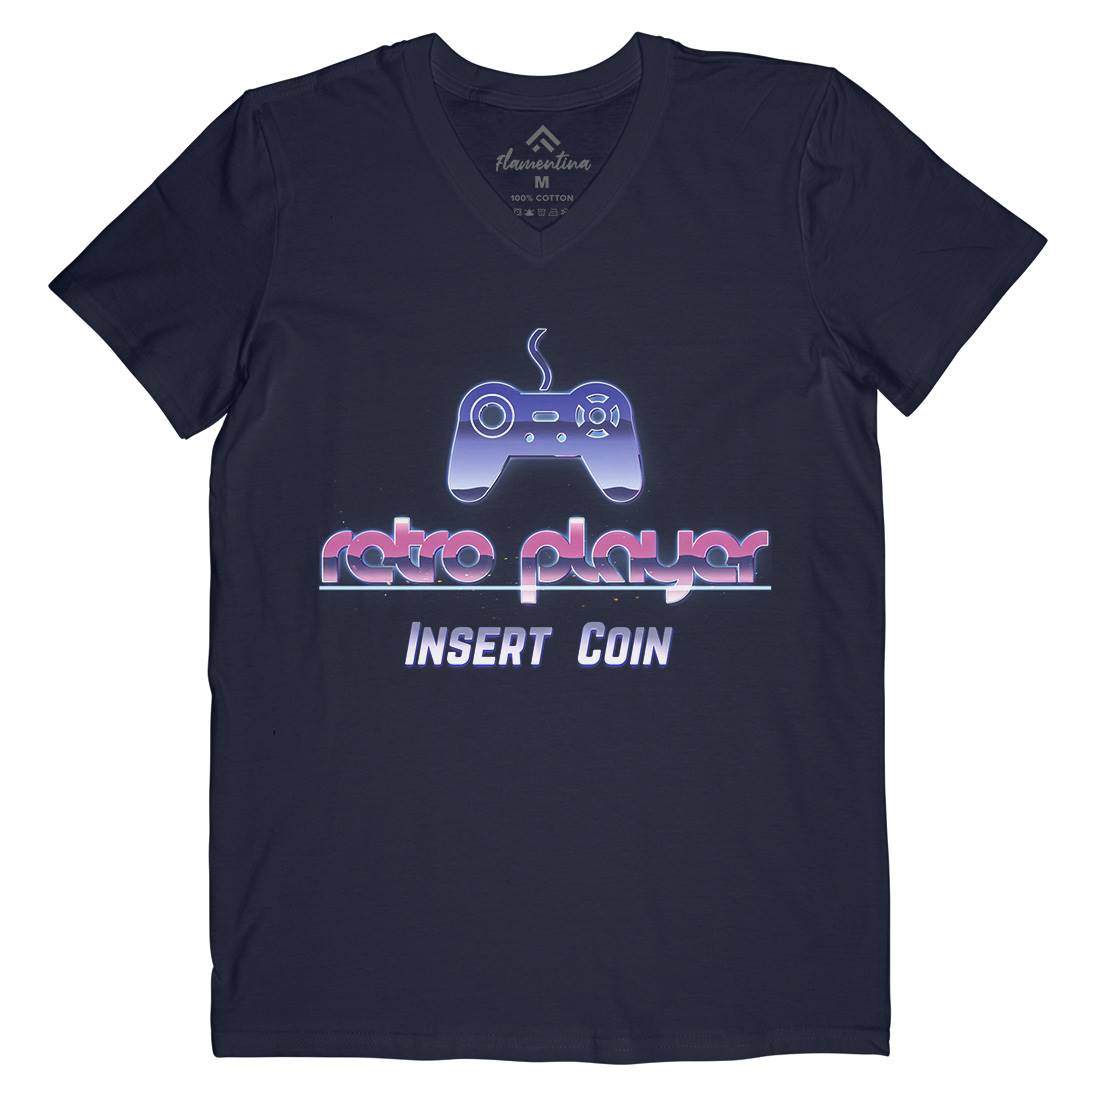 Retro Player Mens Organic V-Neck T-Shirt Geek B998